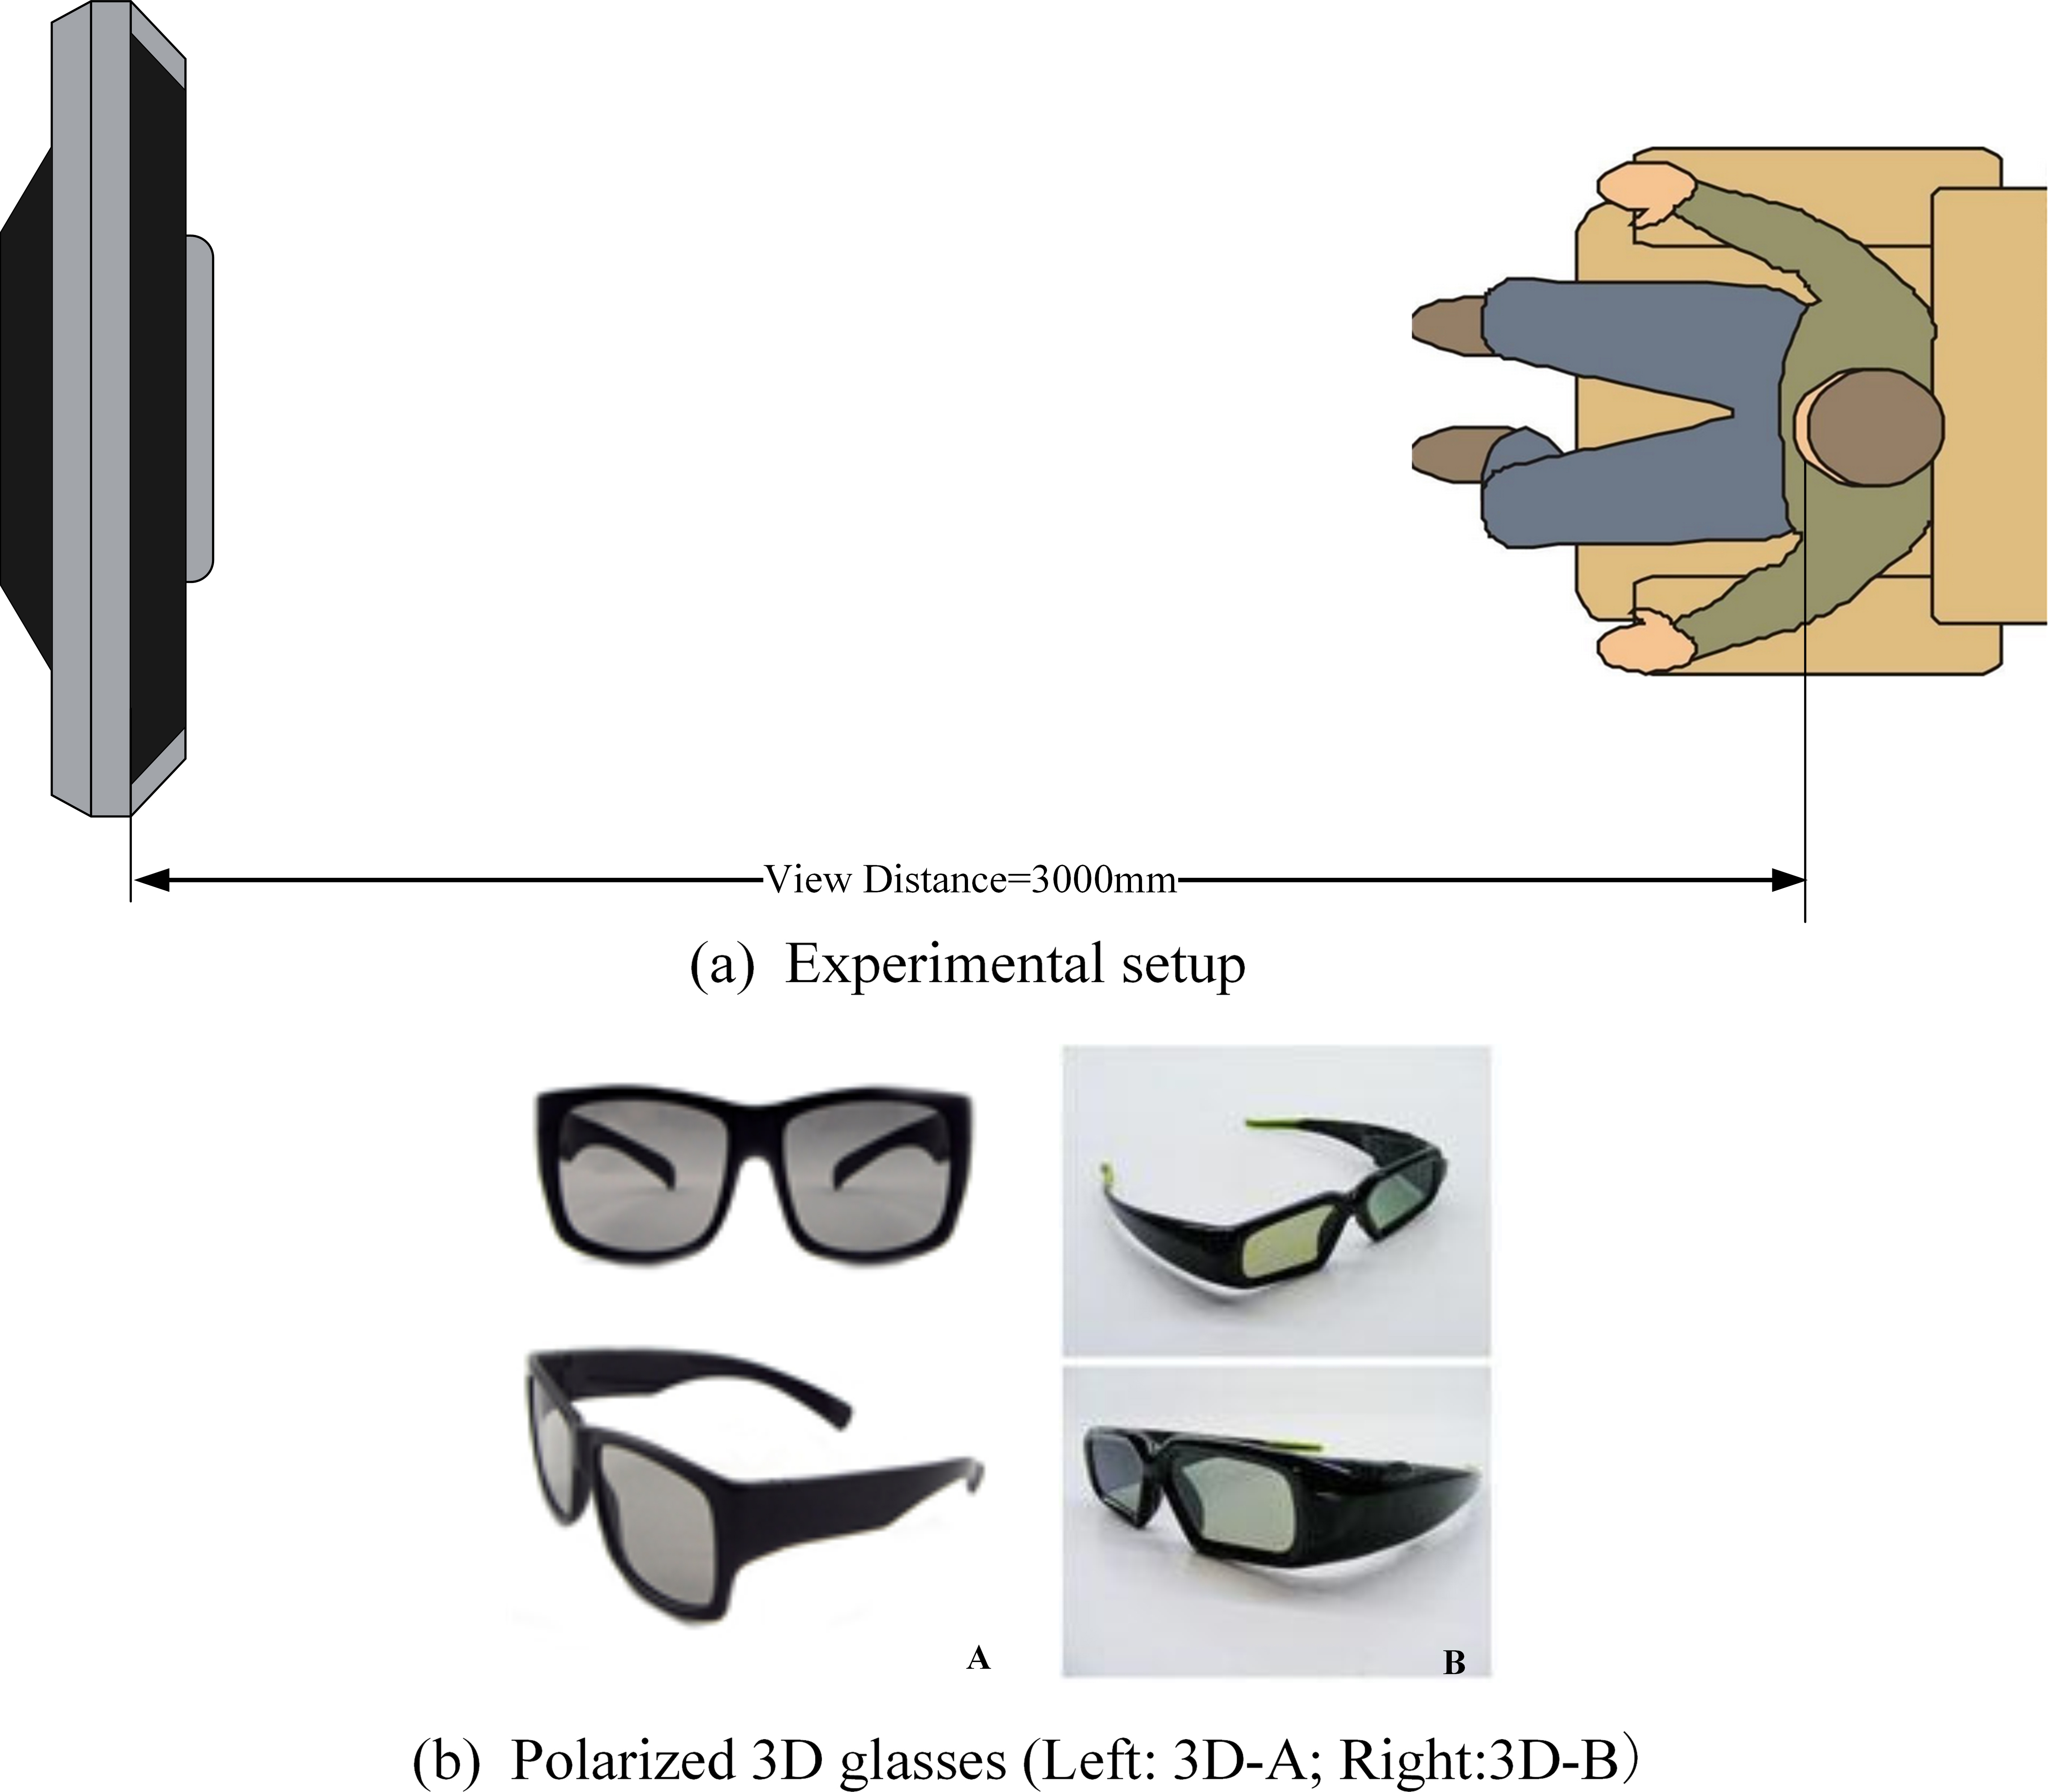 a) Experimental setup and b) Polarized 3D glasses (left: 3D-A; right: 3D-B).